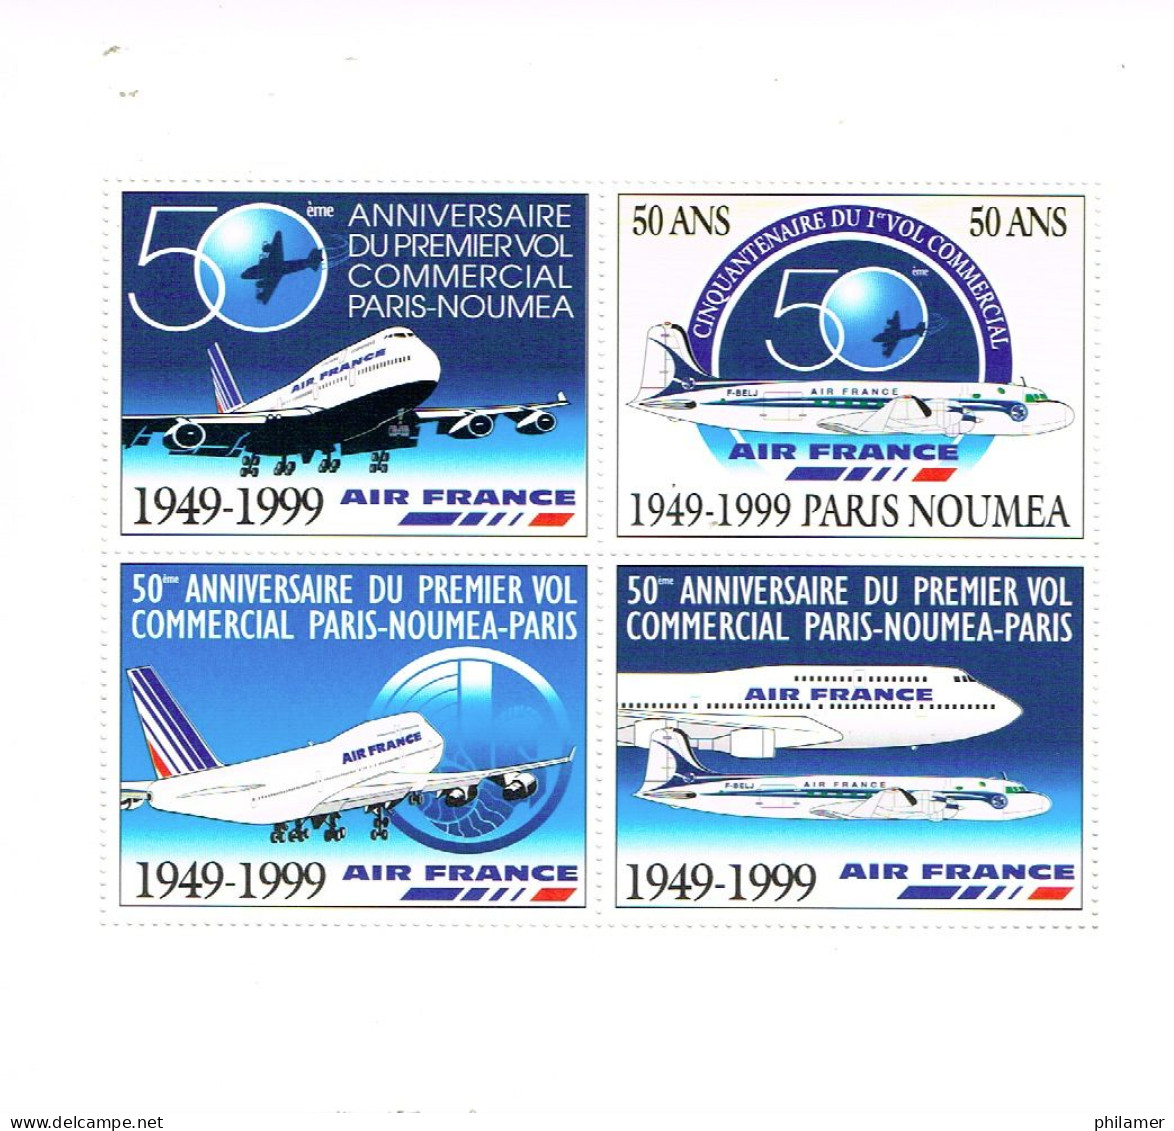 Nouvelle Caledonie Caledonia Bloc 4 Vignettes Postales Cinderela Extraite Carnet Aircalin 1999 Avion Neuve TBE - Gebraucht